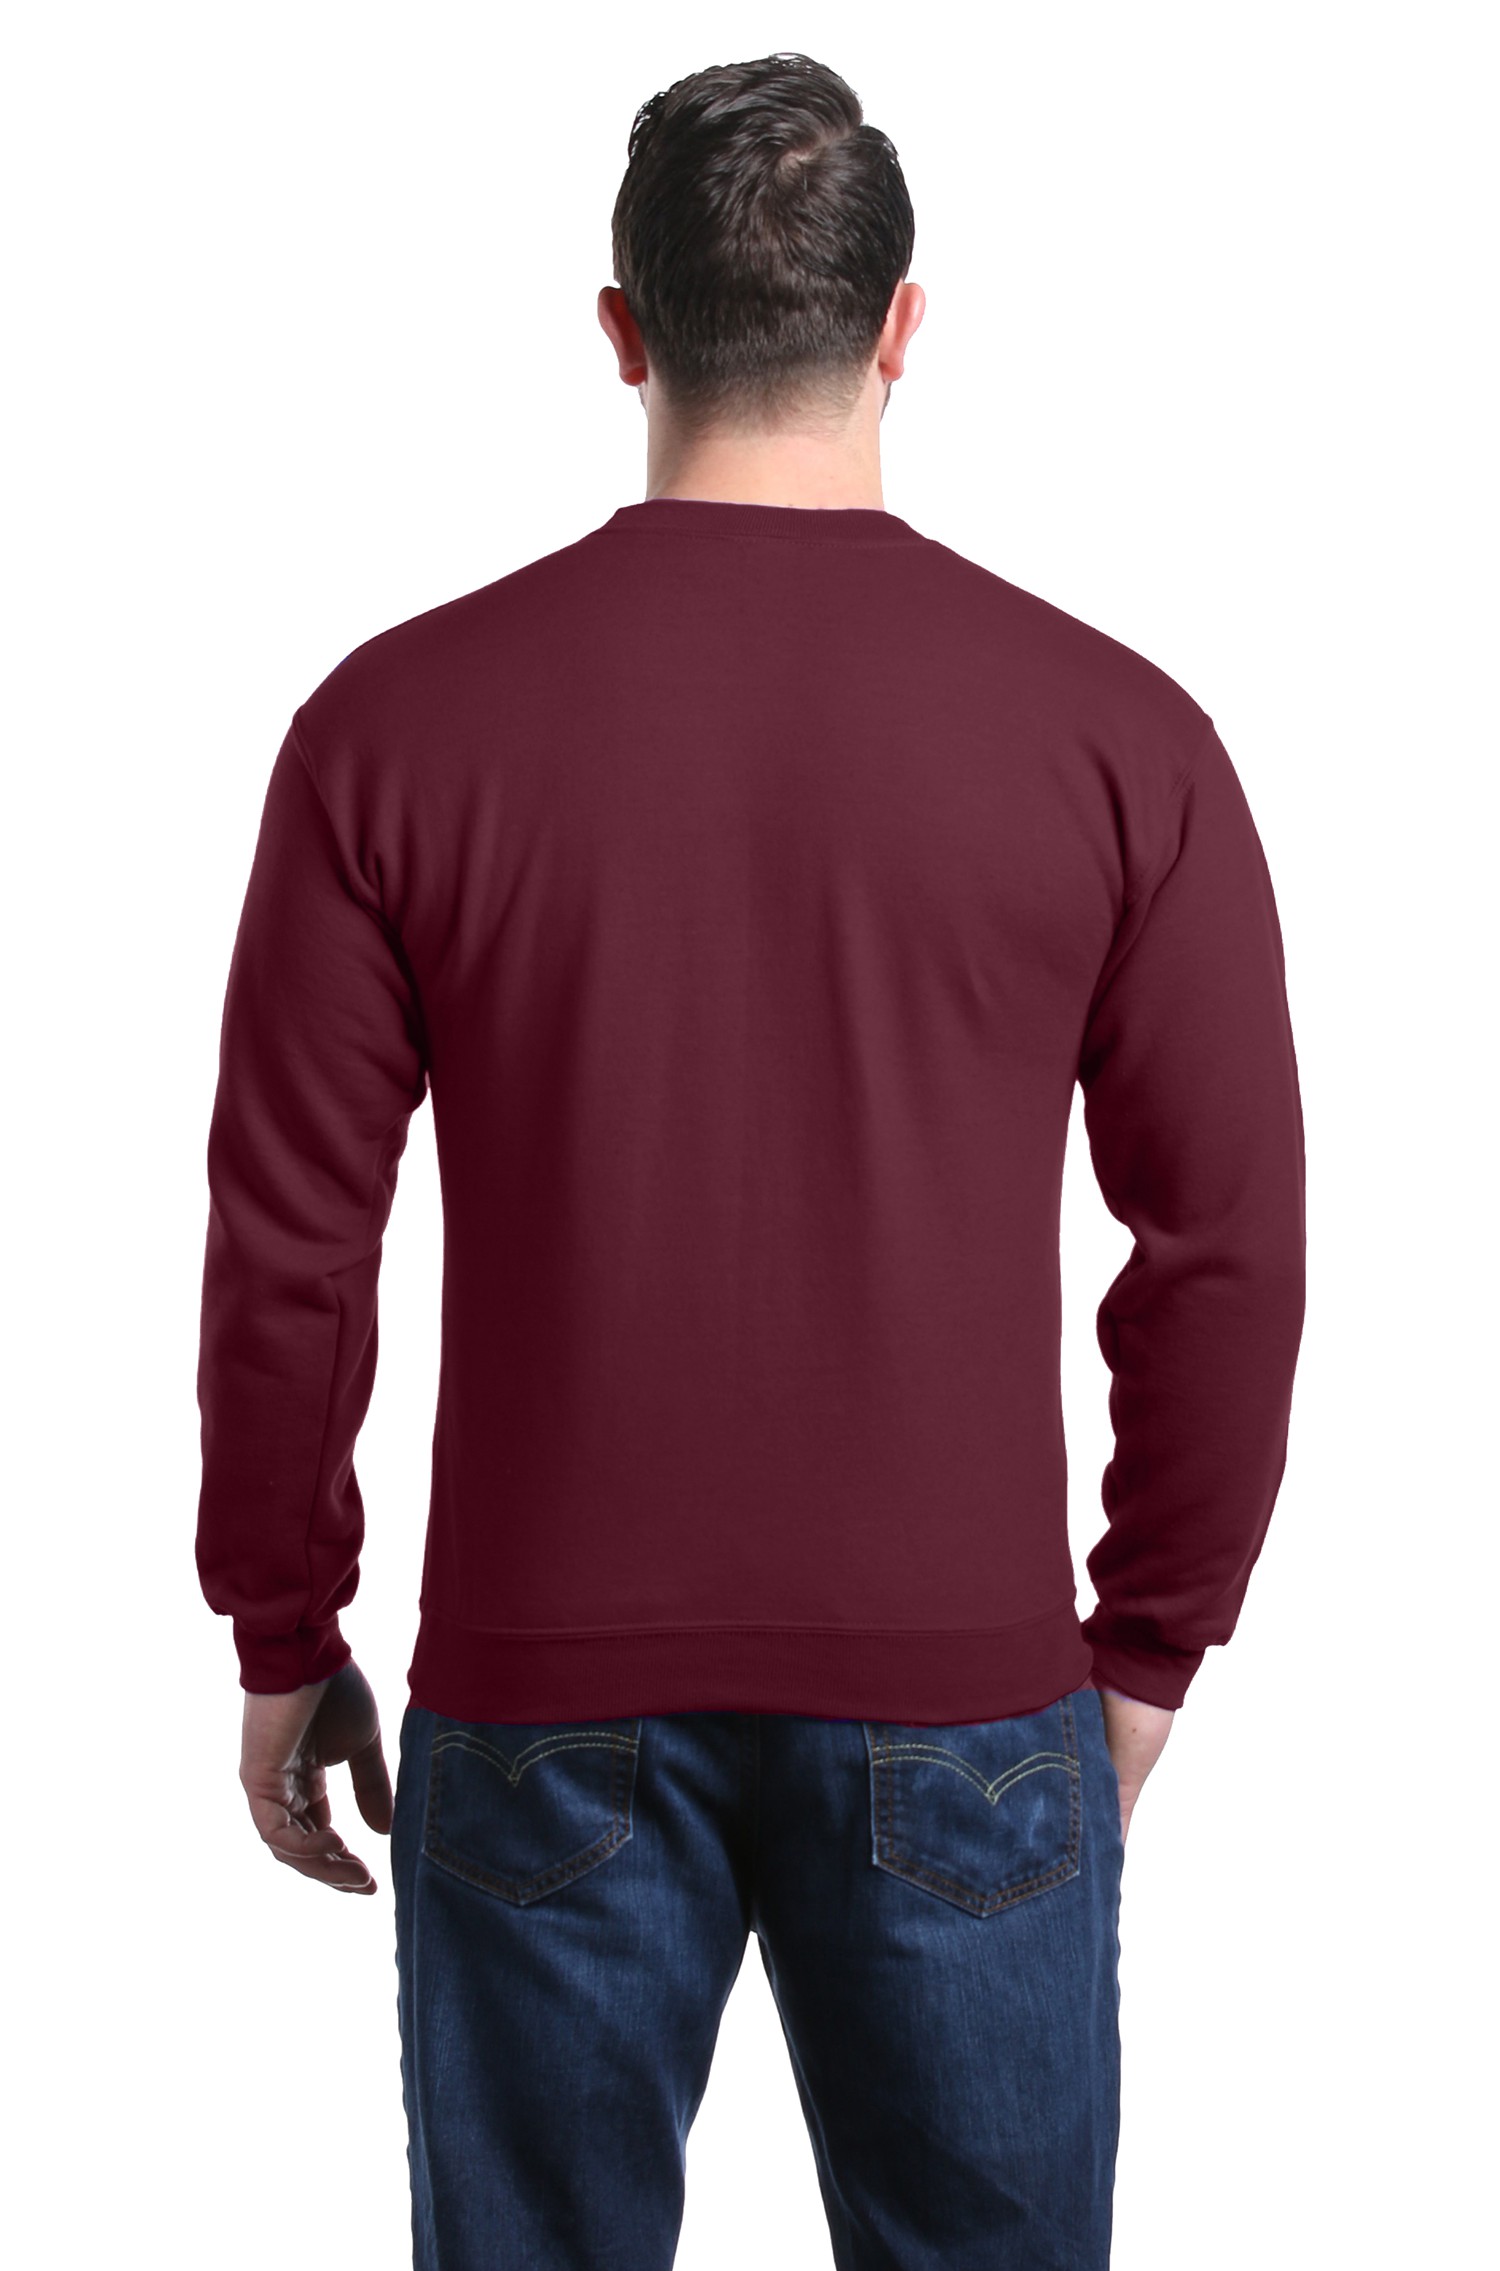 Shop4Ever Men's My Favorite People Call Me Grandma Crewneck Sweatshirt X-Large Maroon - image 3 of 5